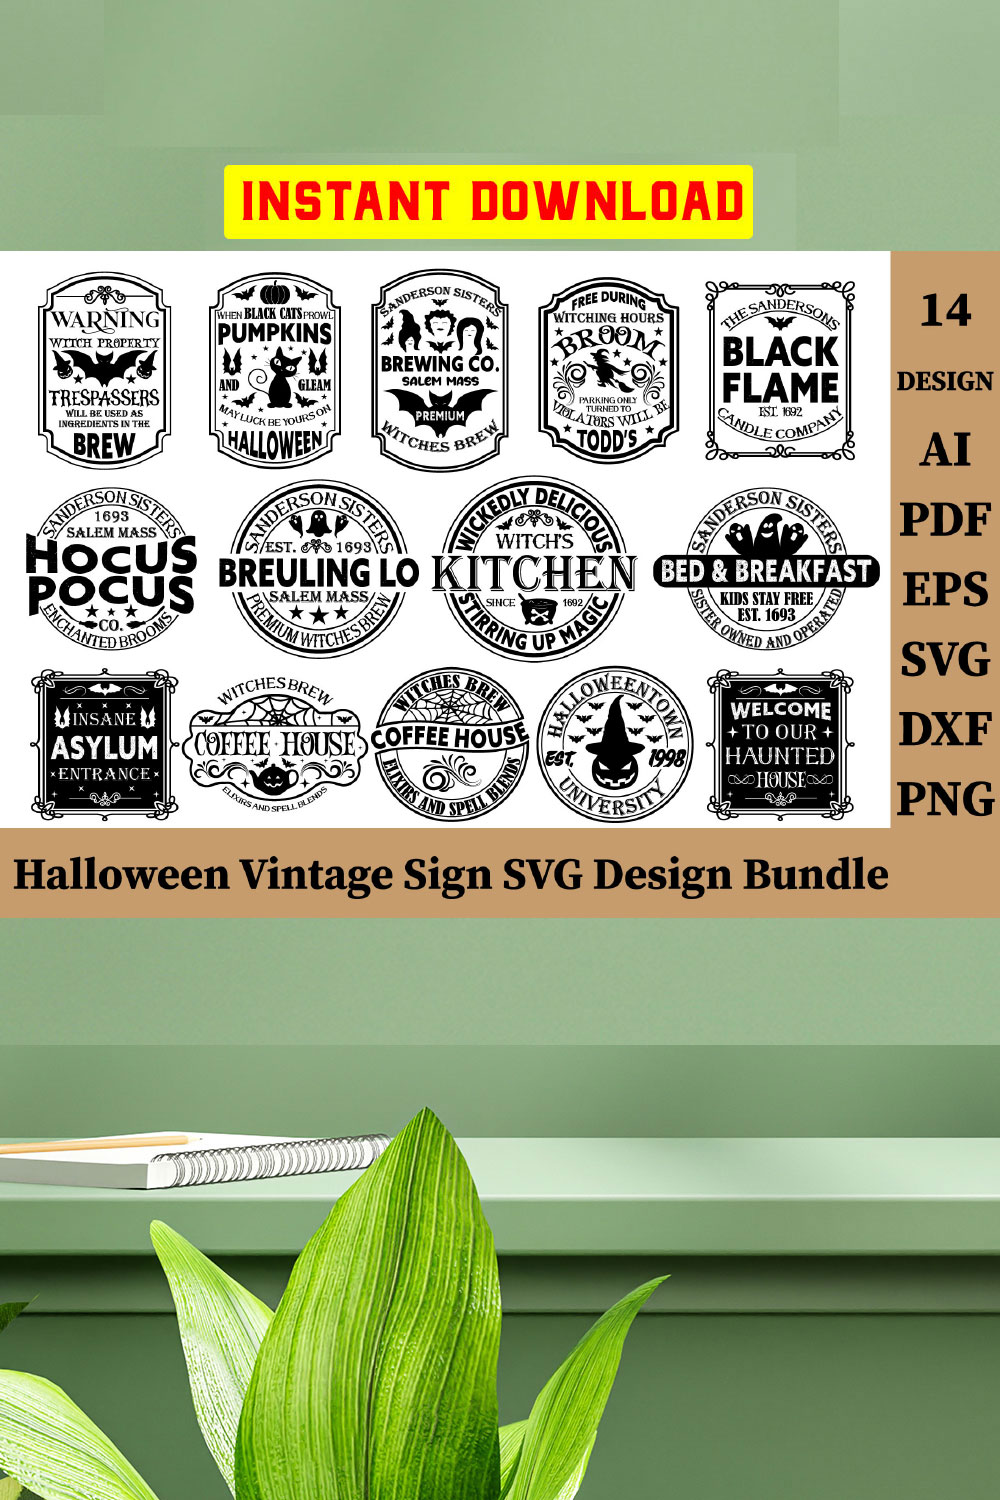 Vintage Halloween Sing svg Bundle - printable halloween signs svg - halloween svg files for cricut pinterest preview image.